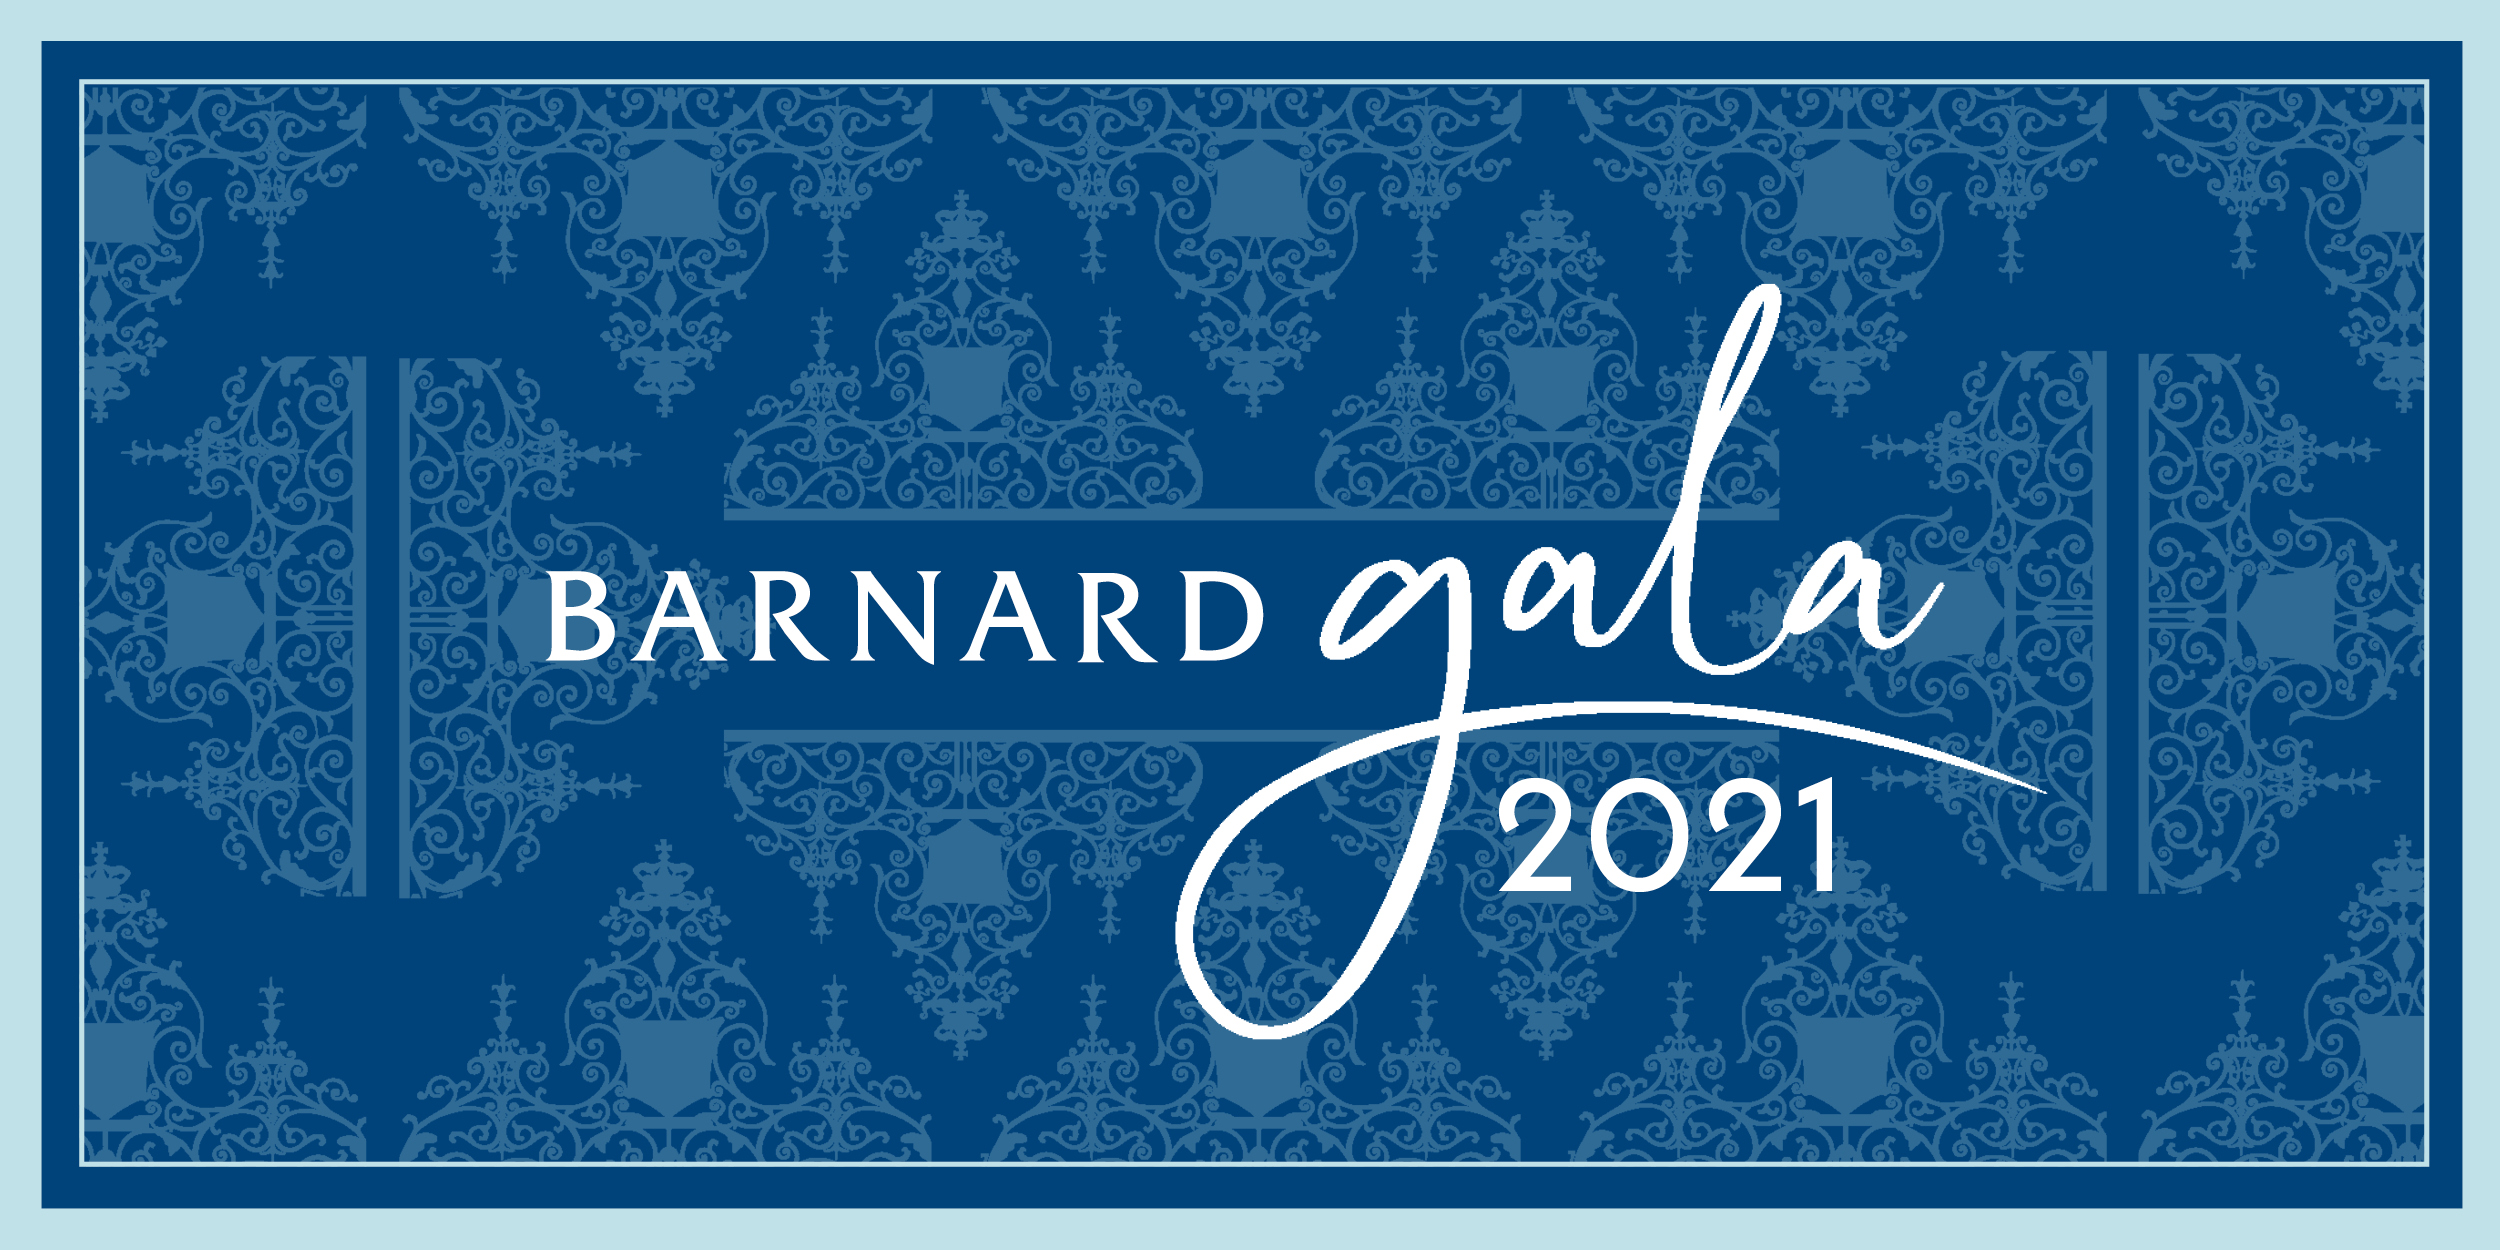 Barnard’s 2021 Annual Gala Raises More Than 2.2 Million for Student